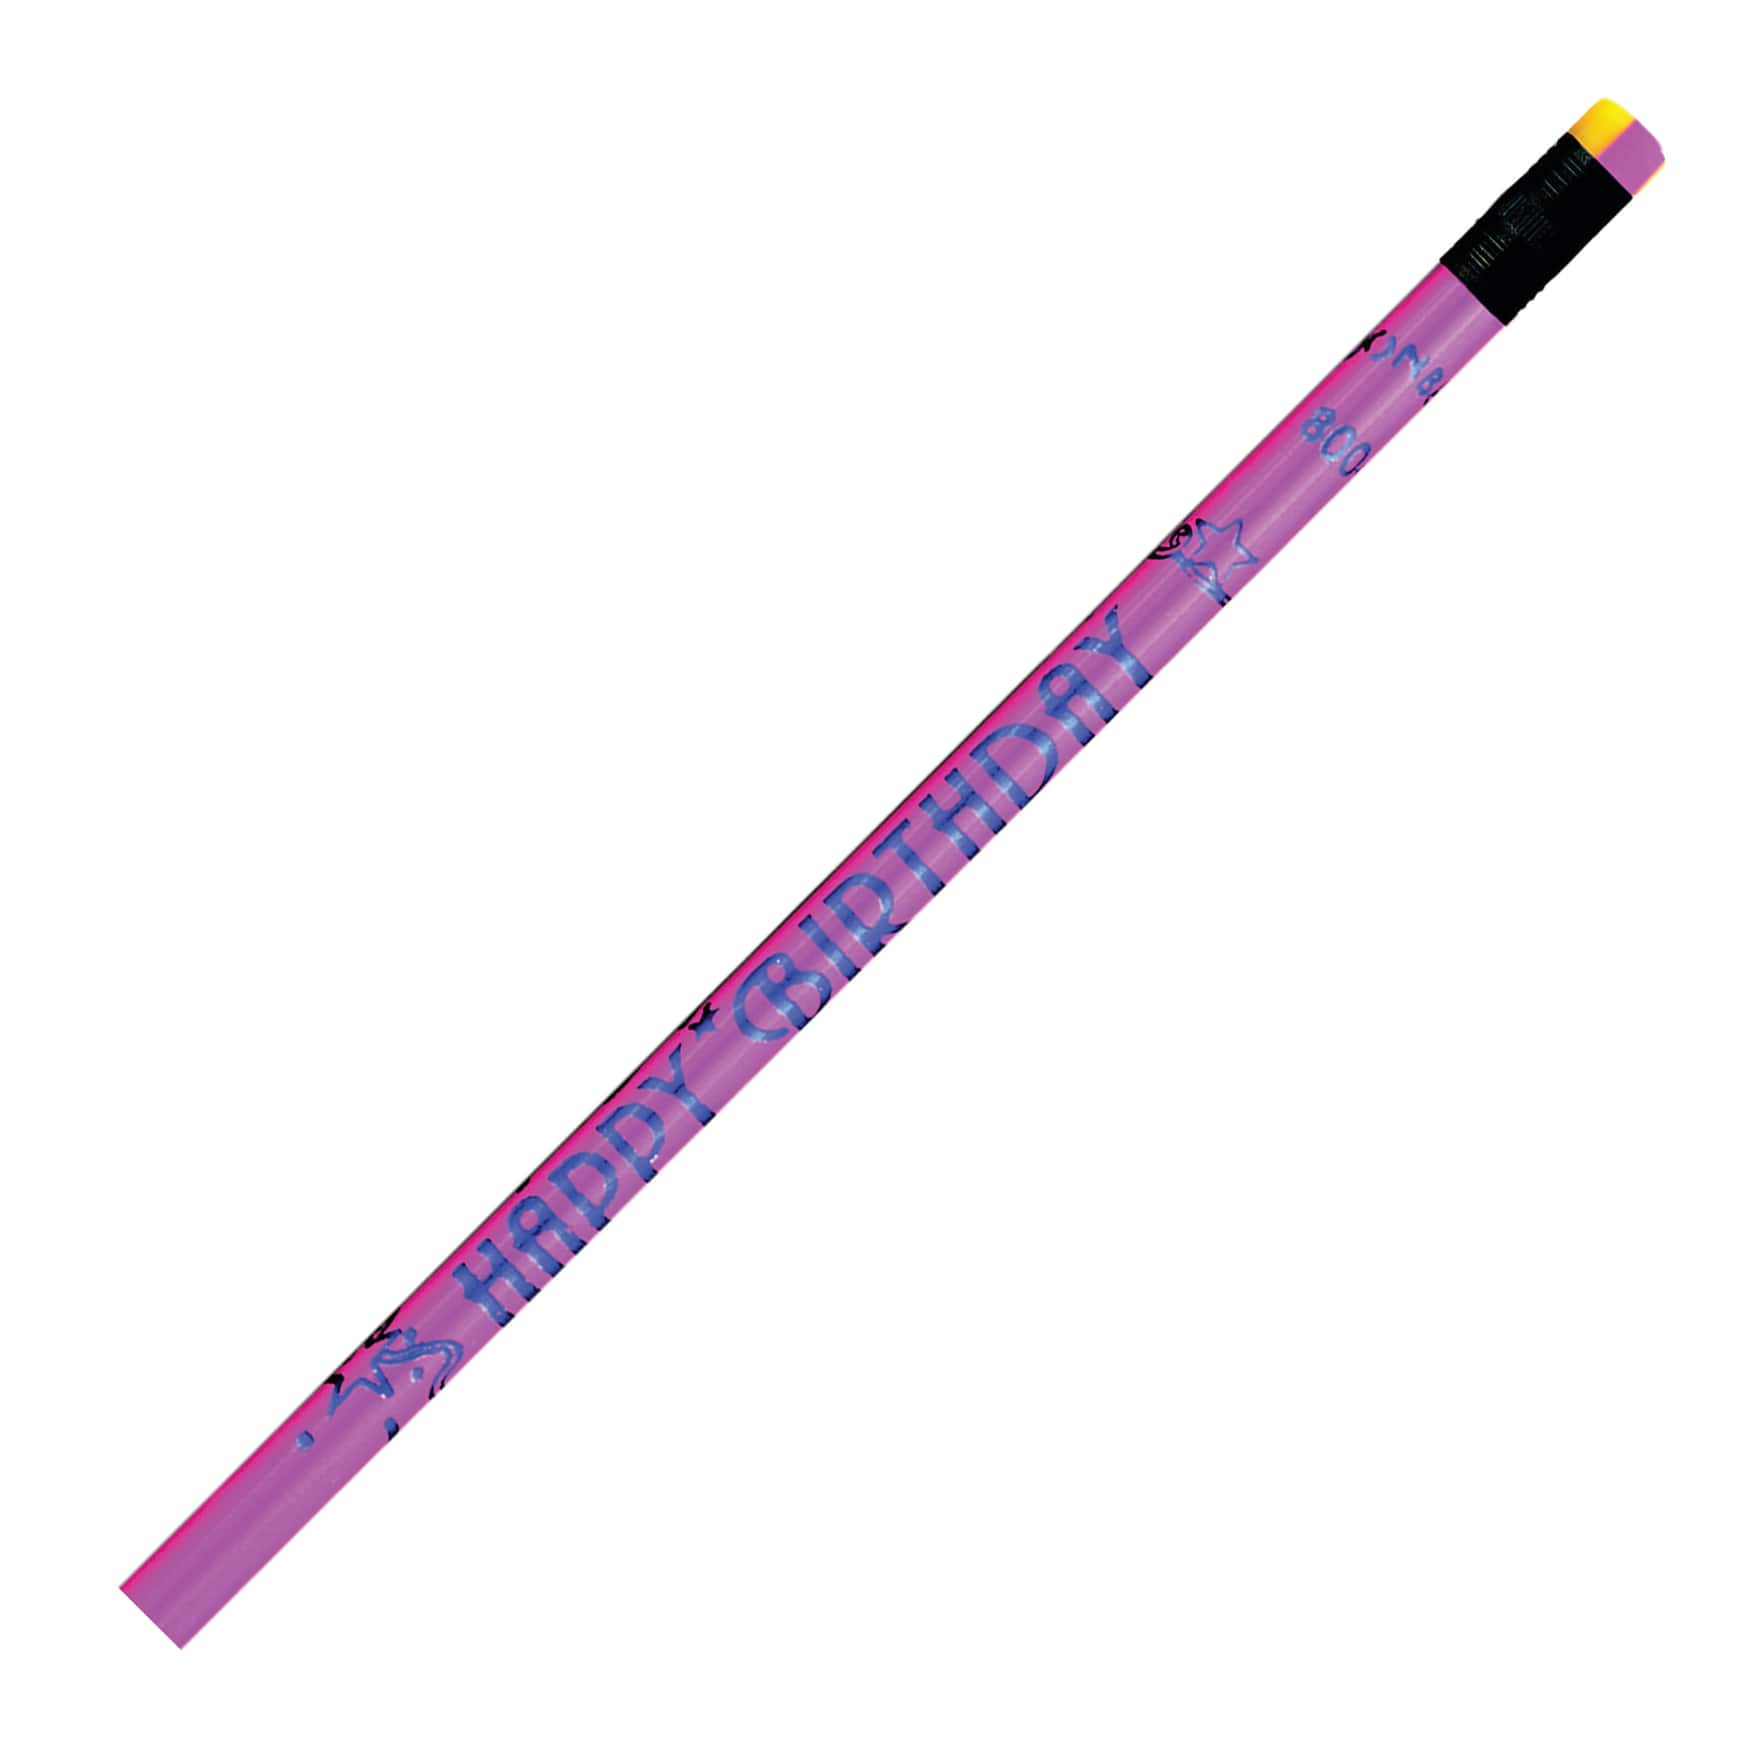 J.R. Moon Pencil Co. Neon Happy Birthday Pencils 12 Per Pack - 12 Packs